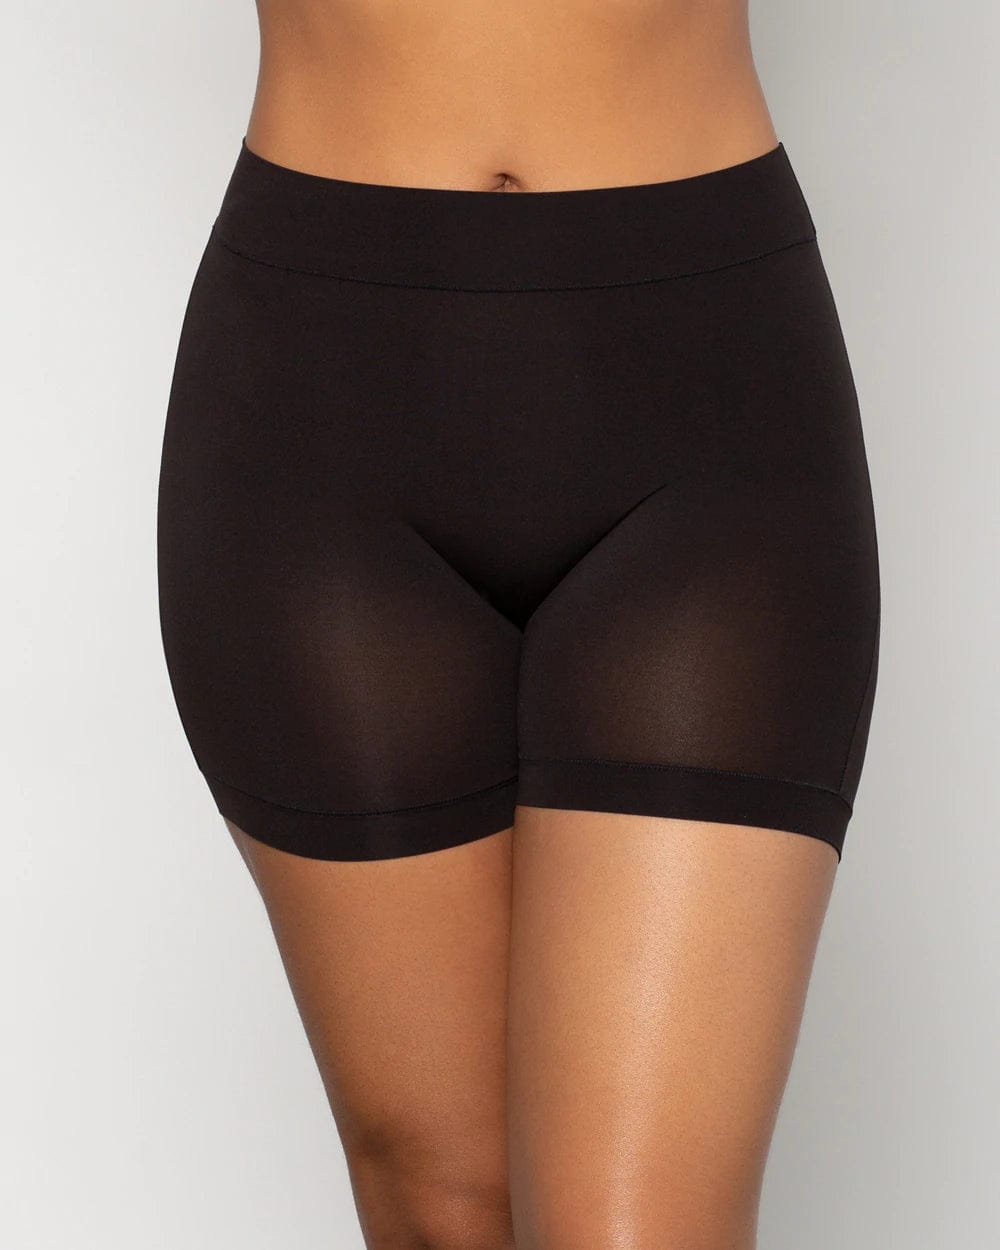 Curvy Couture Underwear Black Hue / L/XL Slip Short - Black Hue